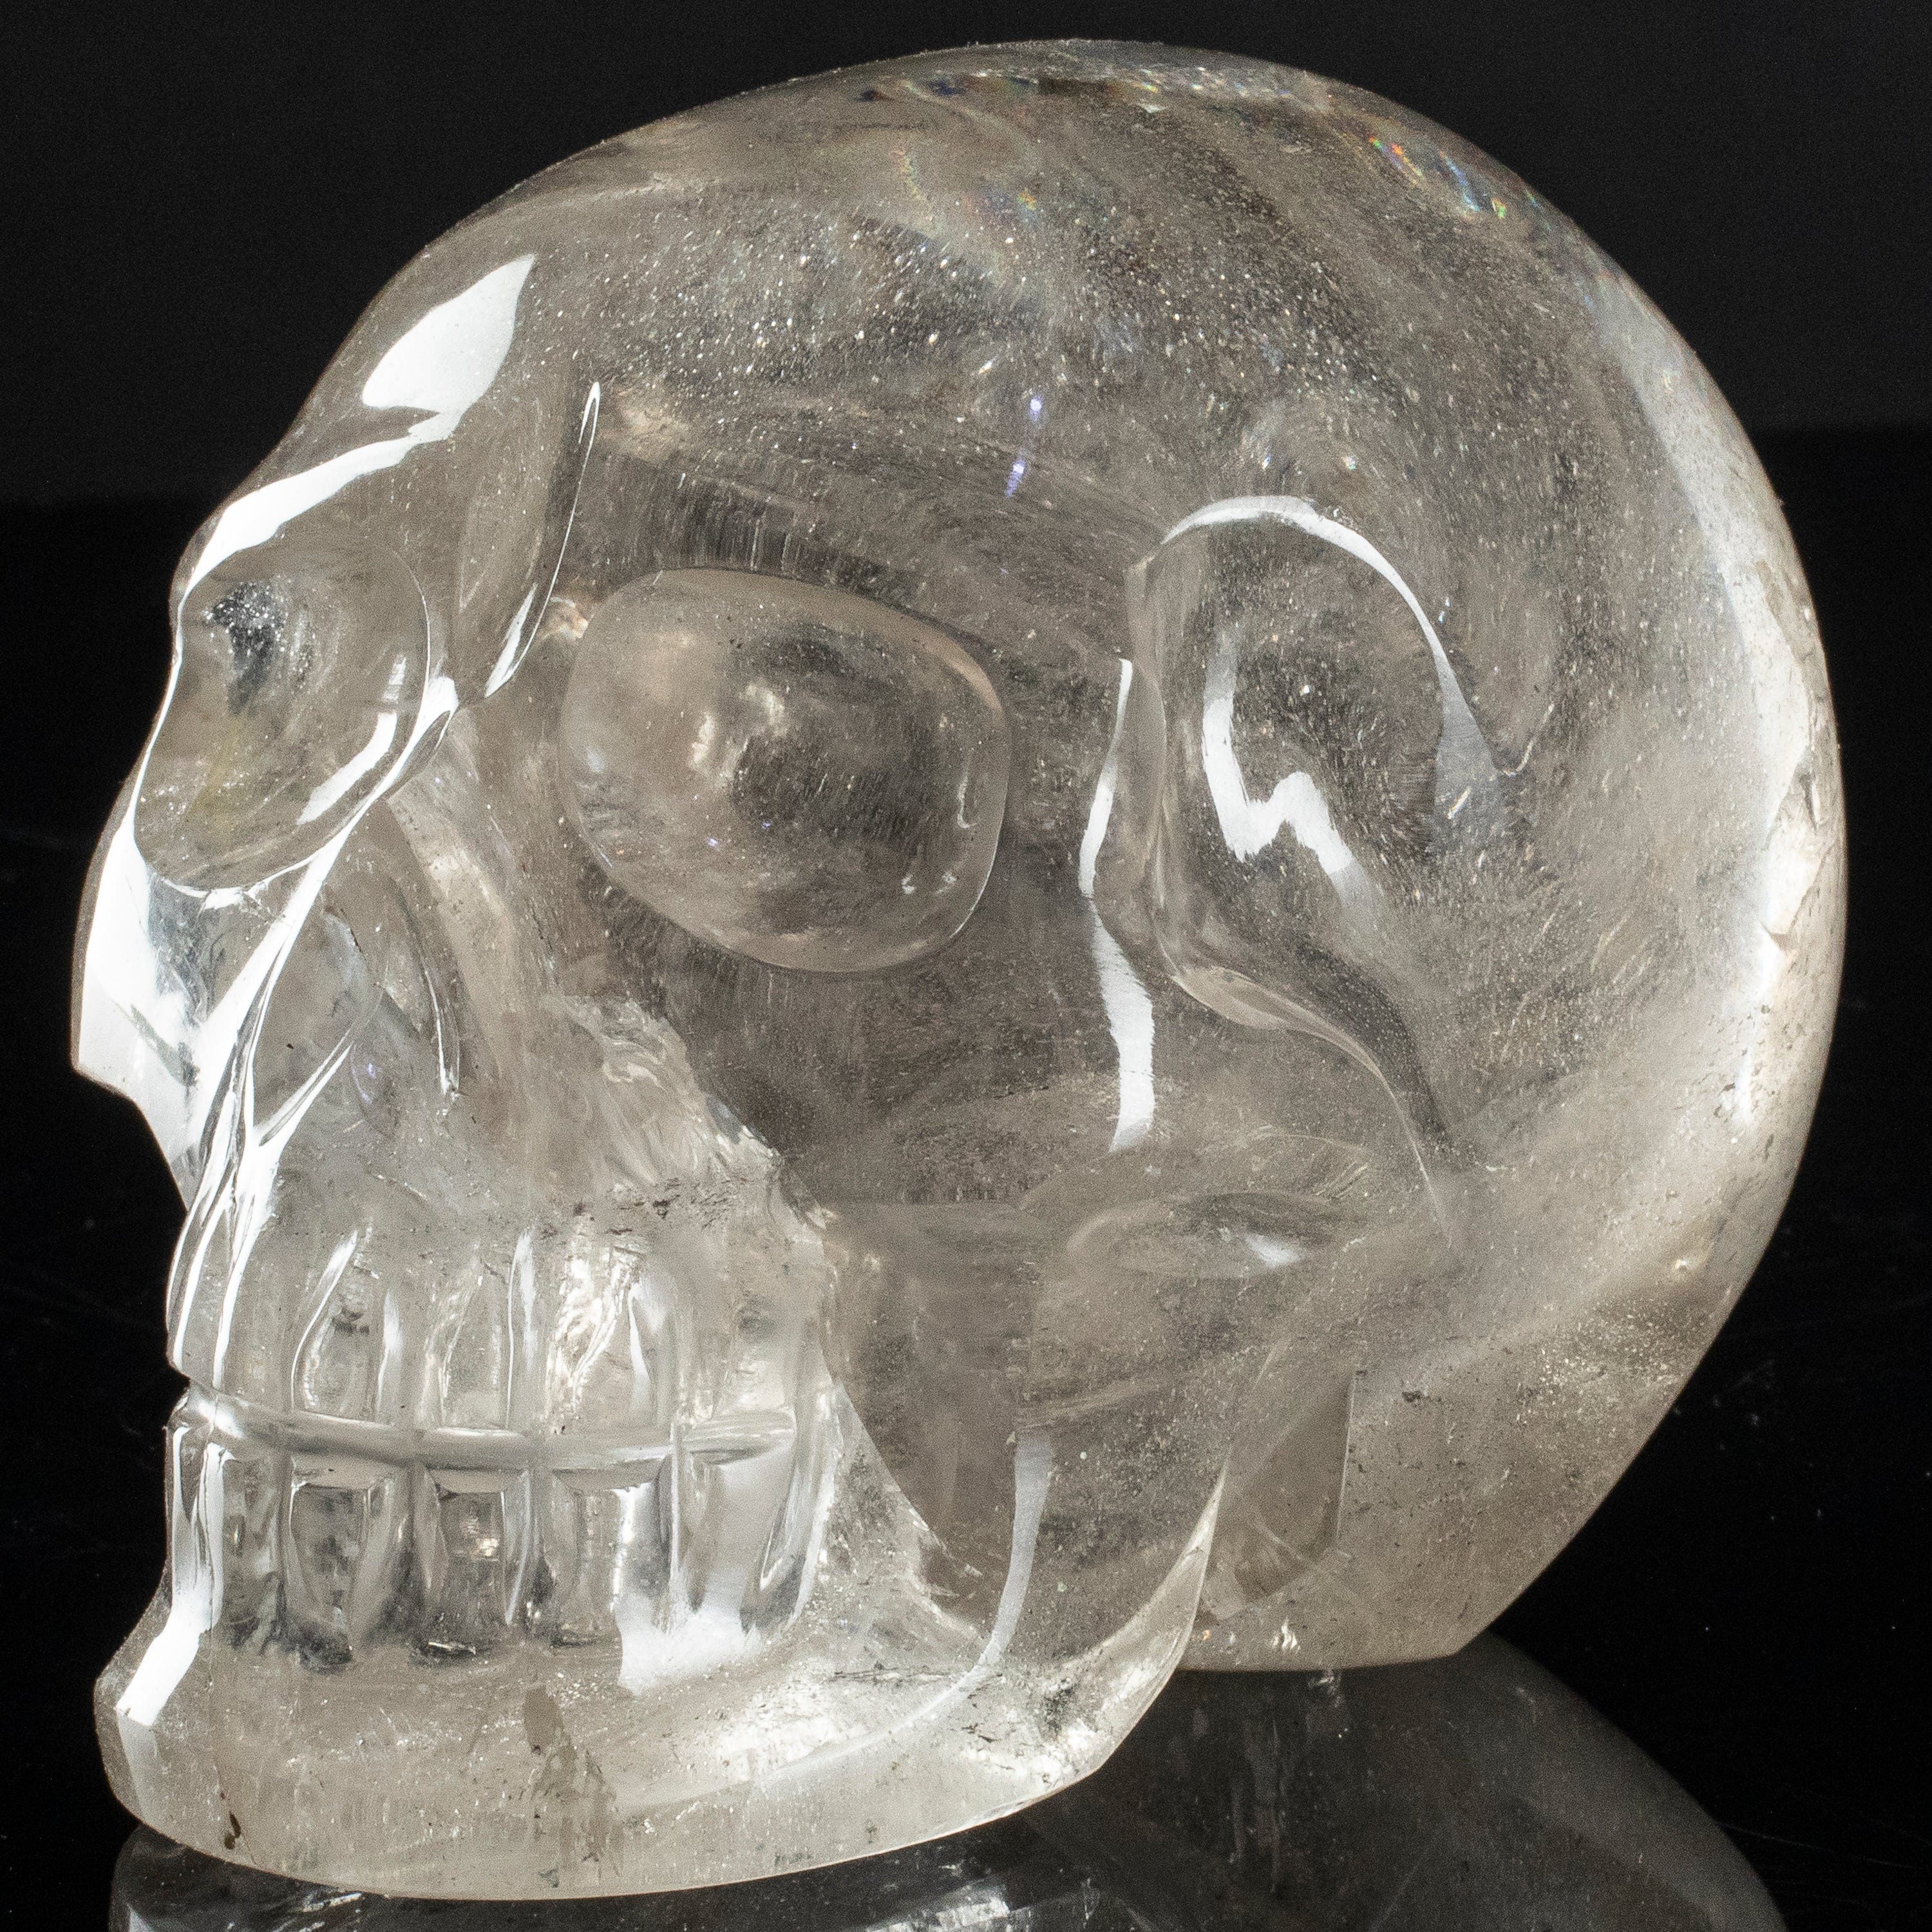 Kalifano Quartz Natural Brazilian Quartz Skull Carving - 4 in. SK3800.002